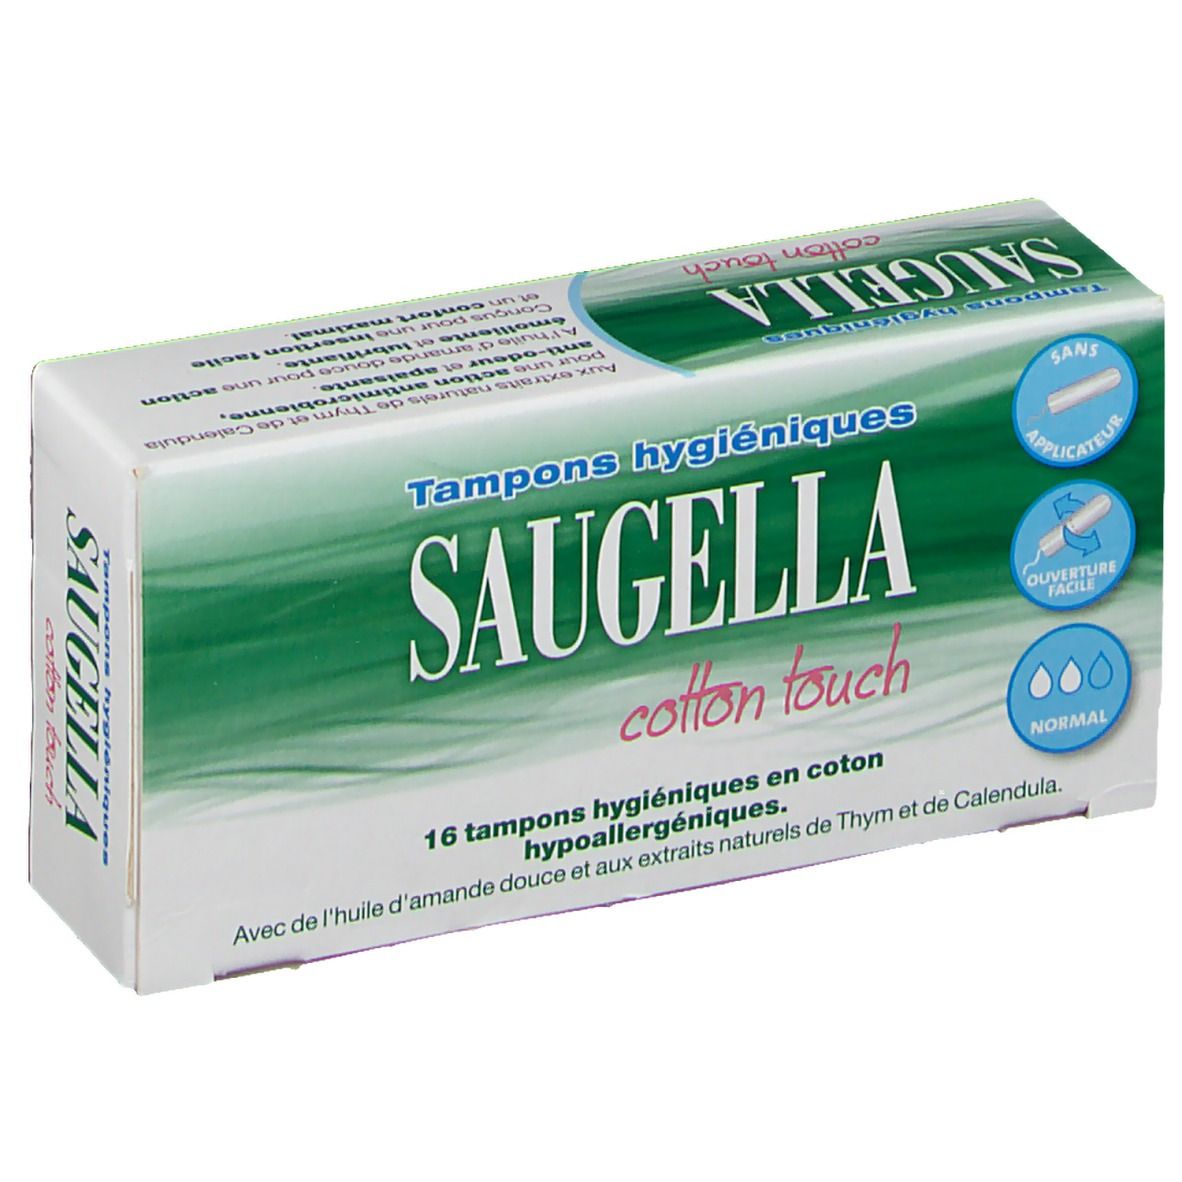 Saugella cotton touch tampons hygiéniques normal